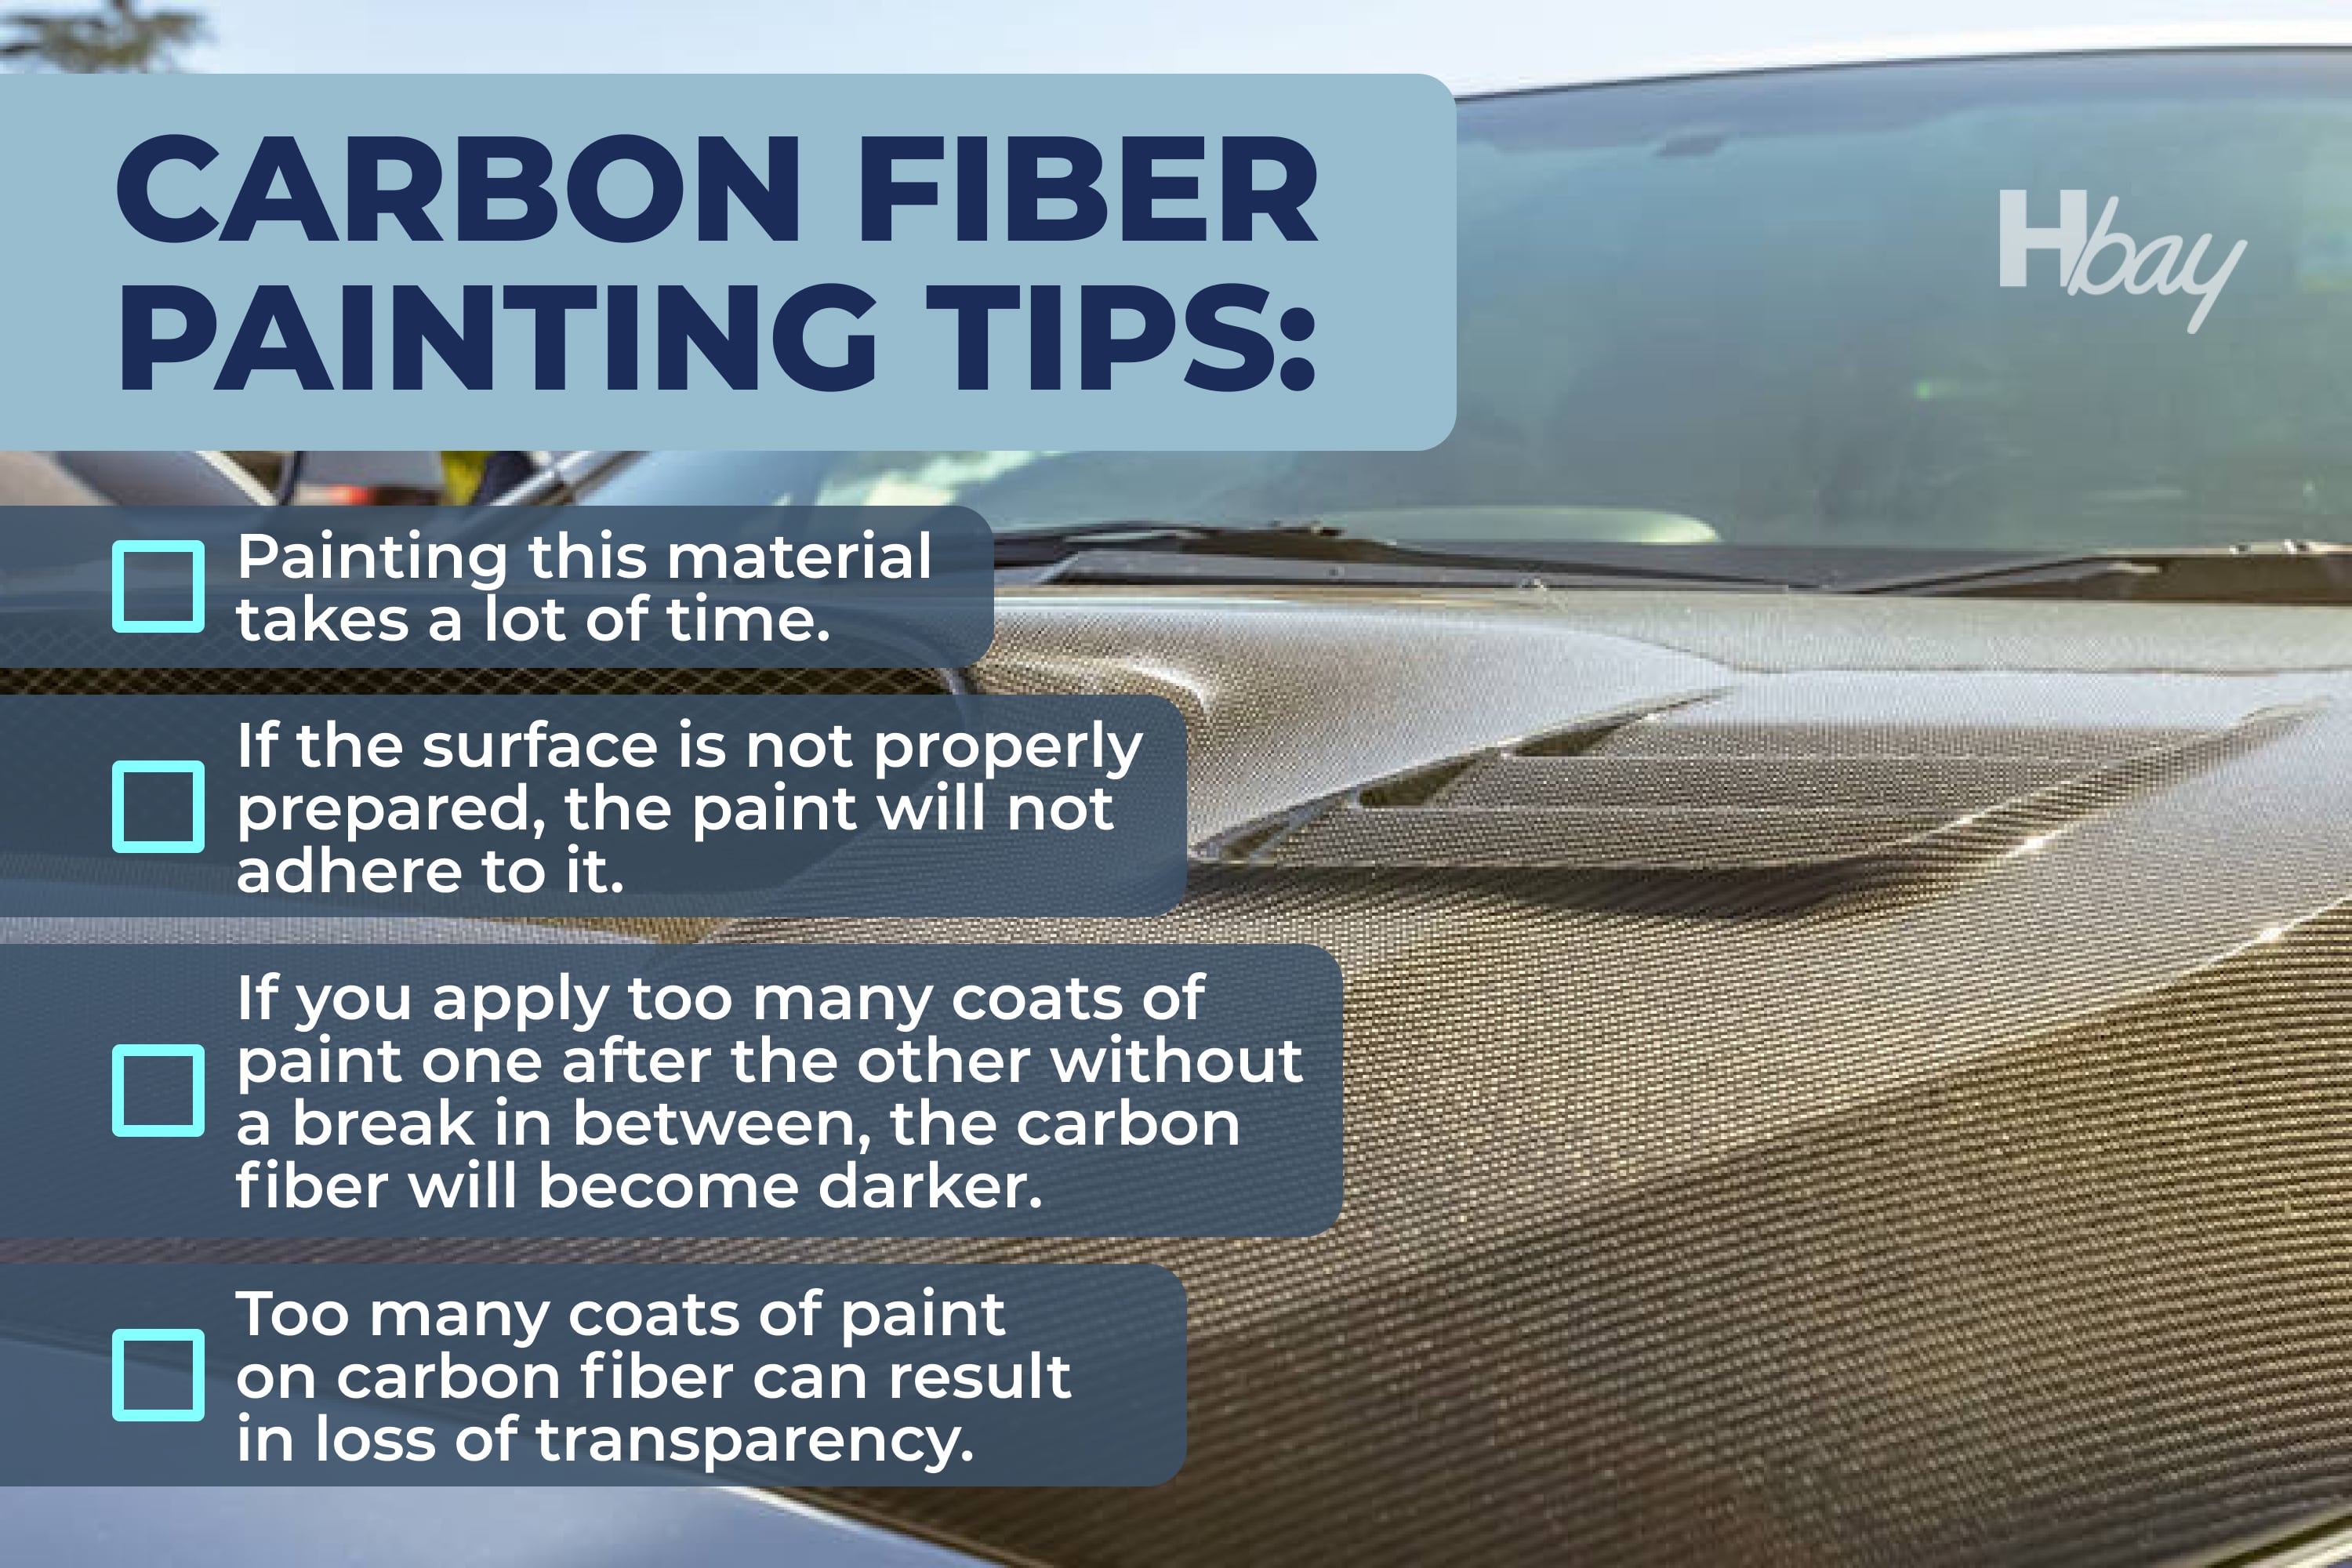 Carbon fiber painting tips